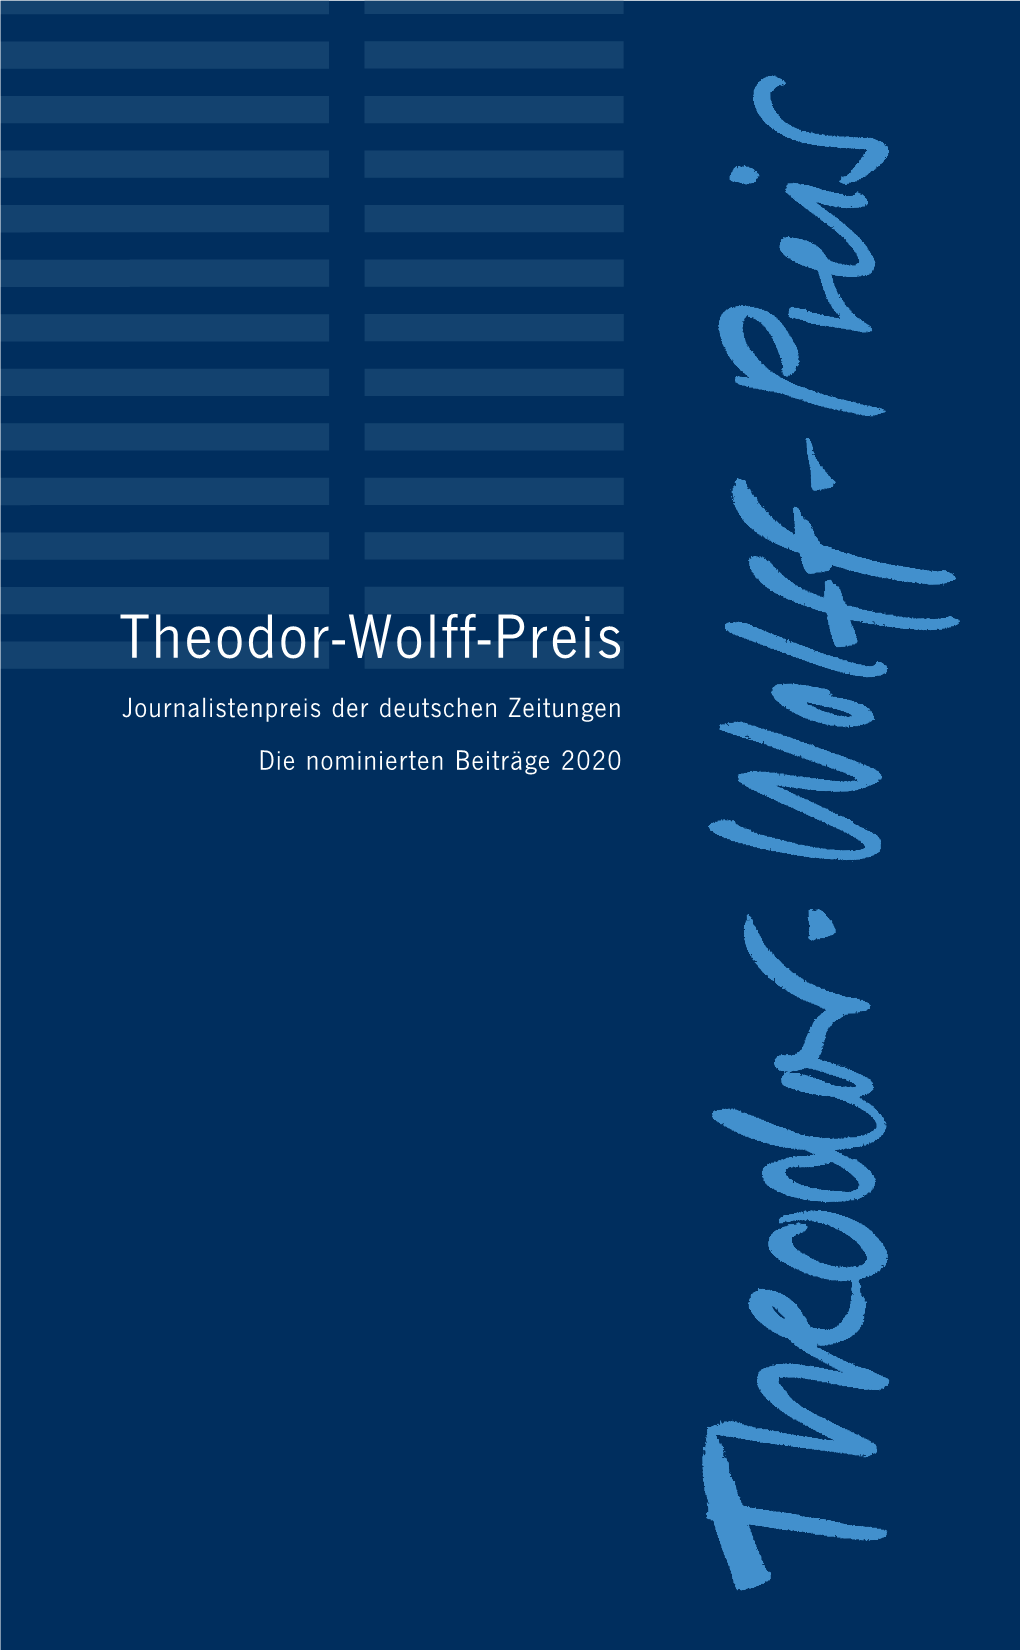 Theodor-Wolff-Preis